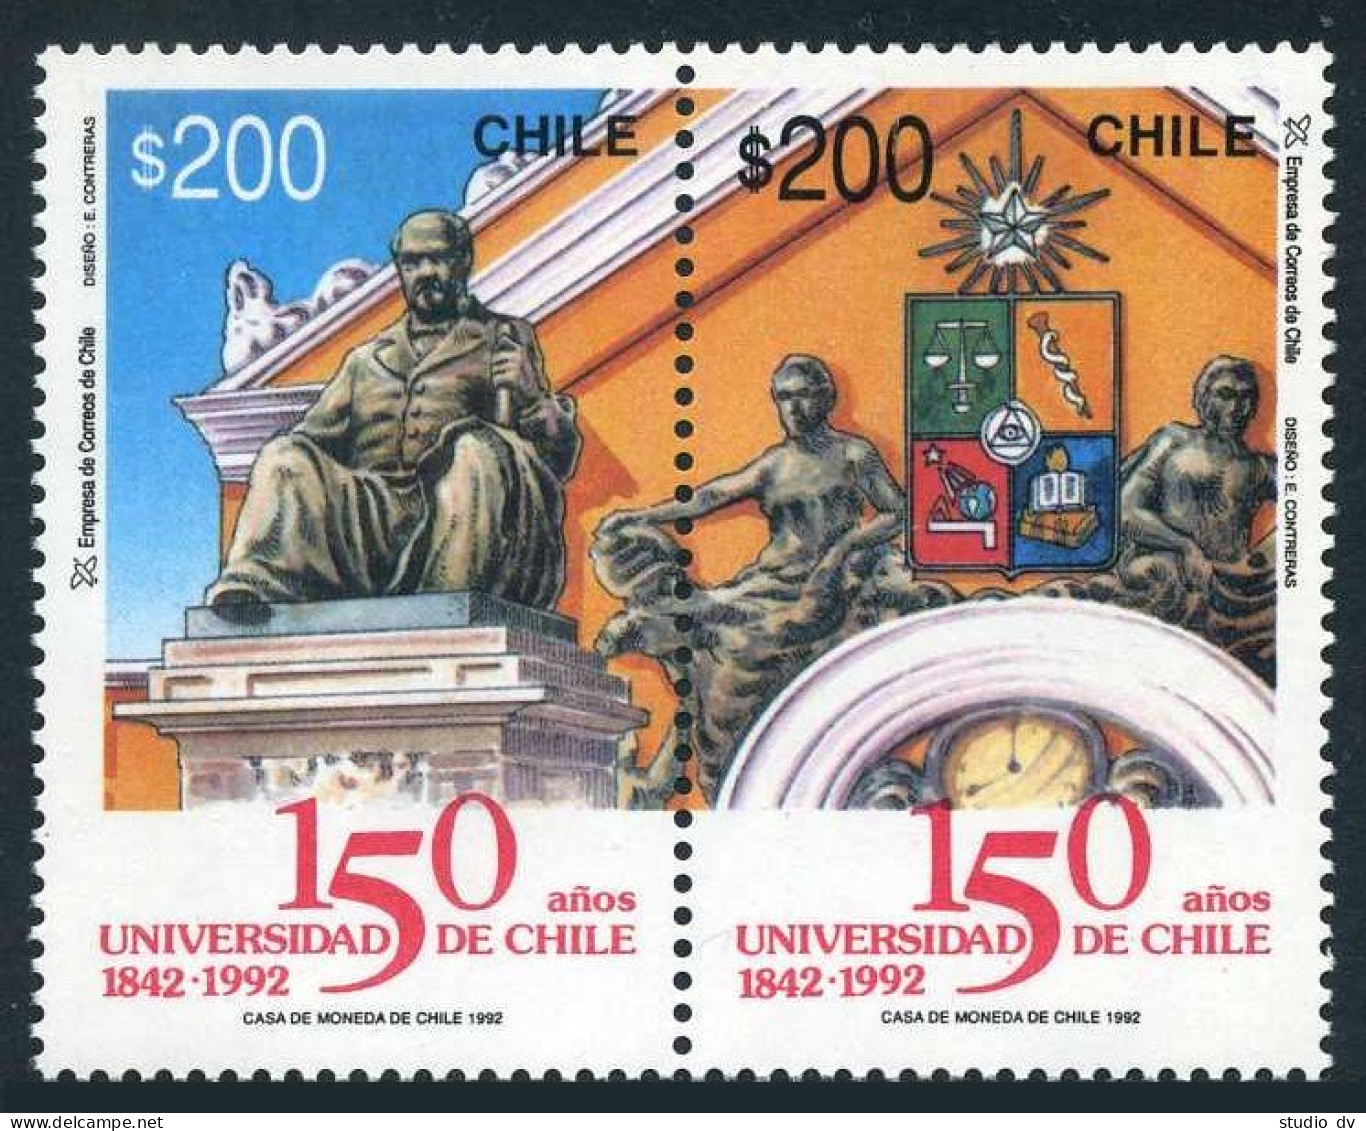 Chile 1034 Ab Pair,MNH. Mi 1534-1535. University Of Chile,150th Ann.1992.Statue, - Chile